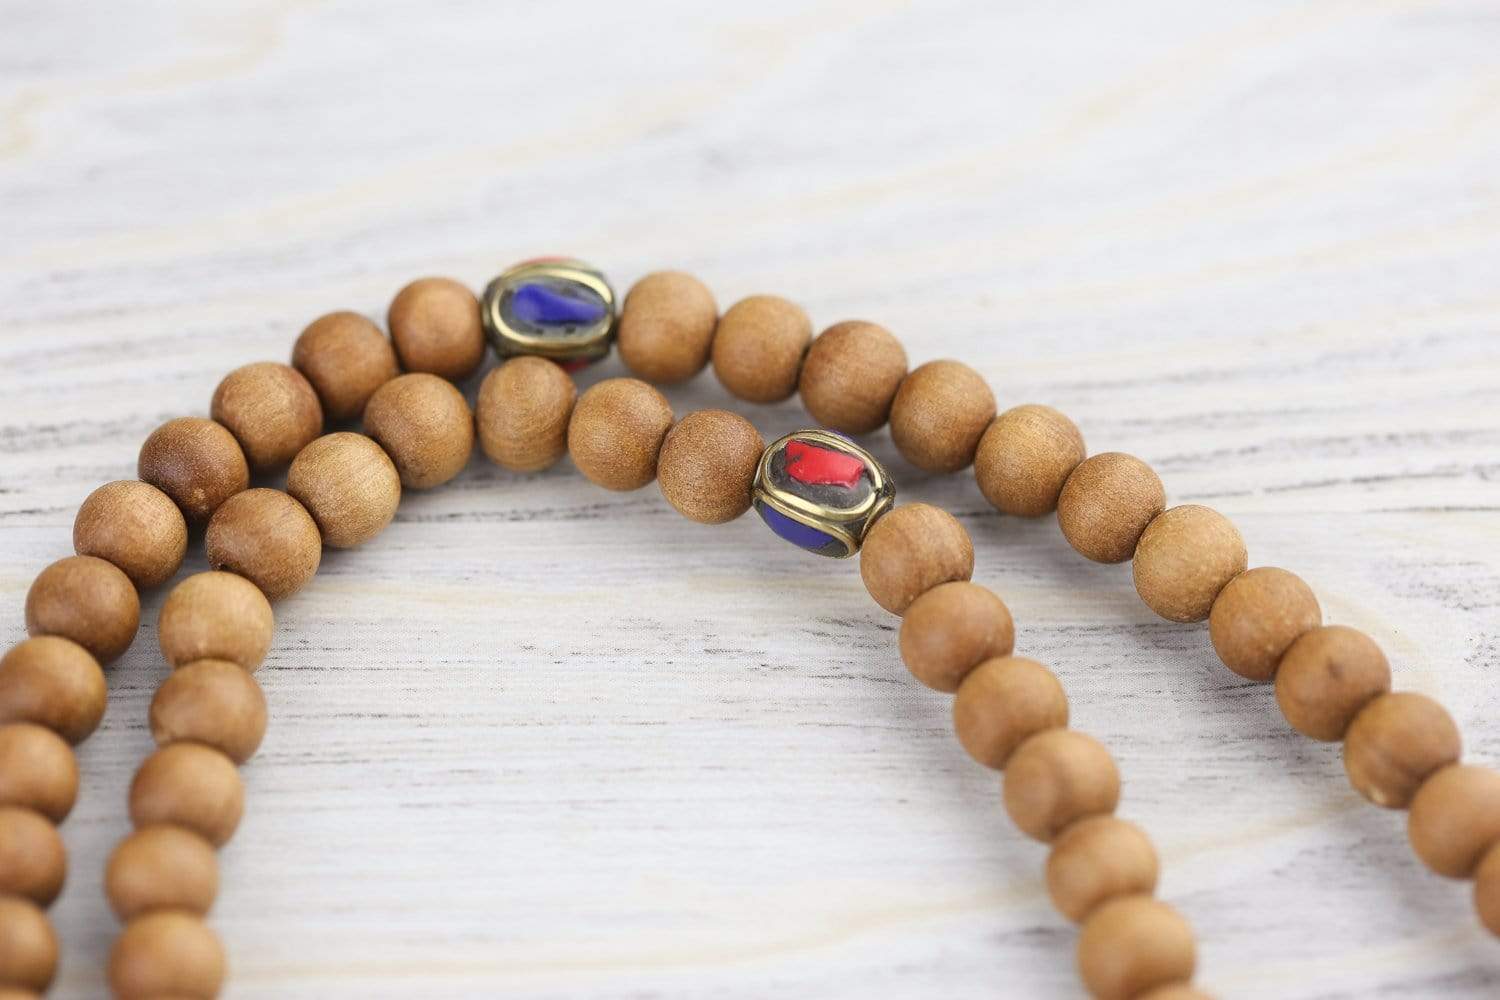 Aromatic Sandalwood Mala Bead Necklace for Reiki, Yoga, Meditation